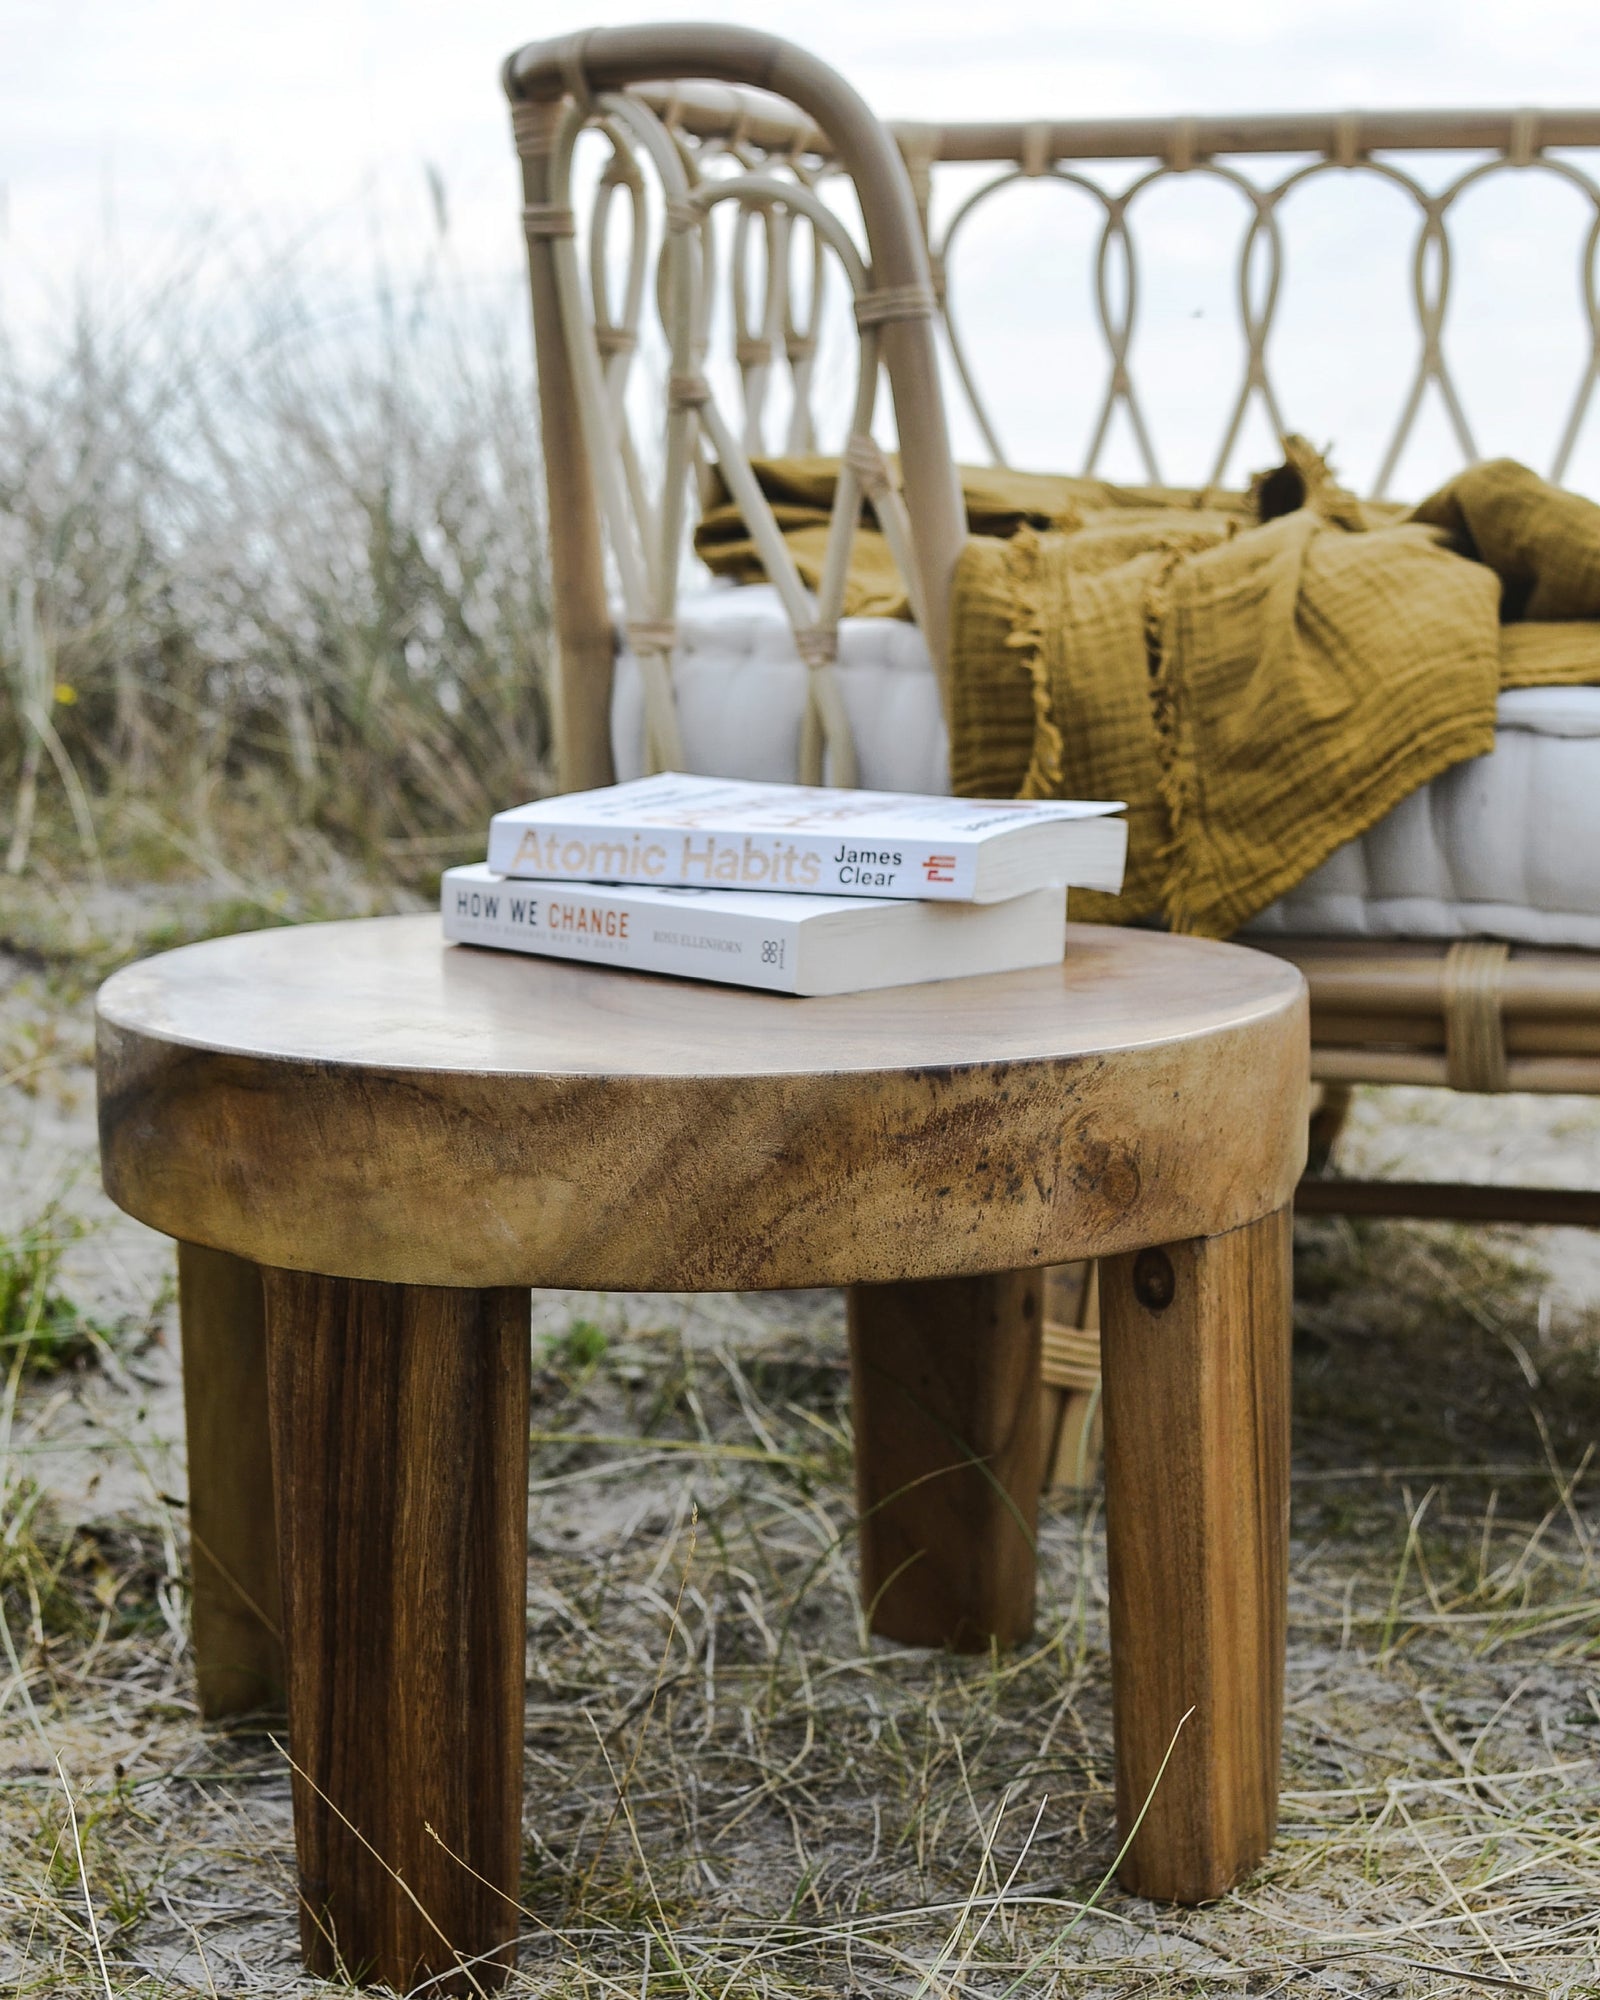 Swar Wood Side Table